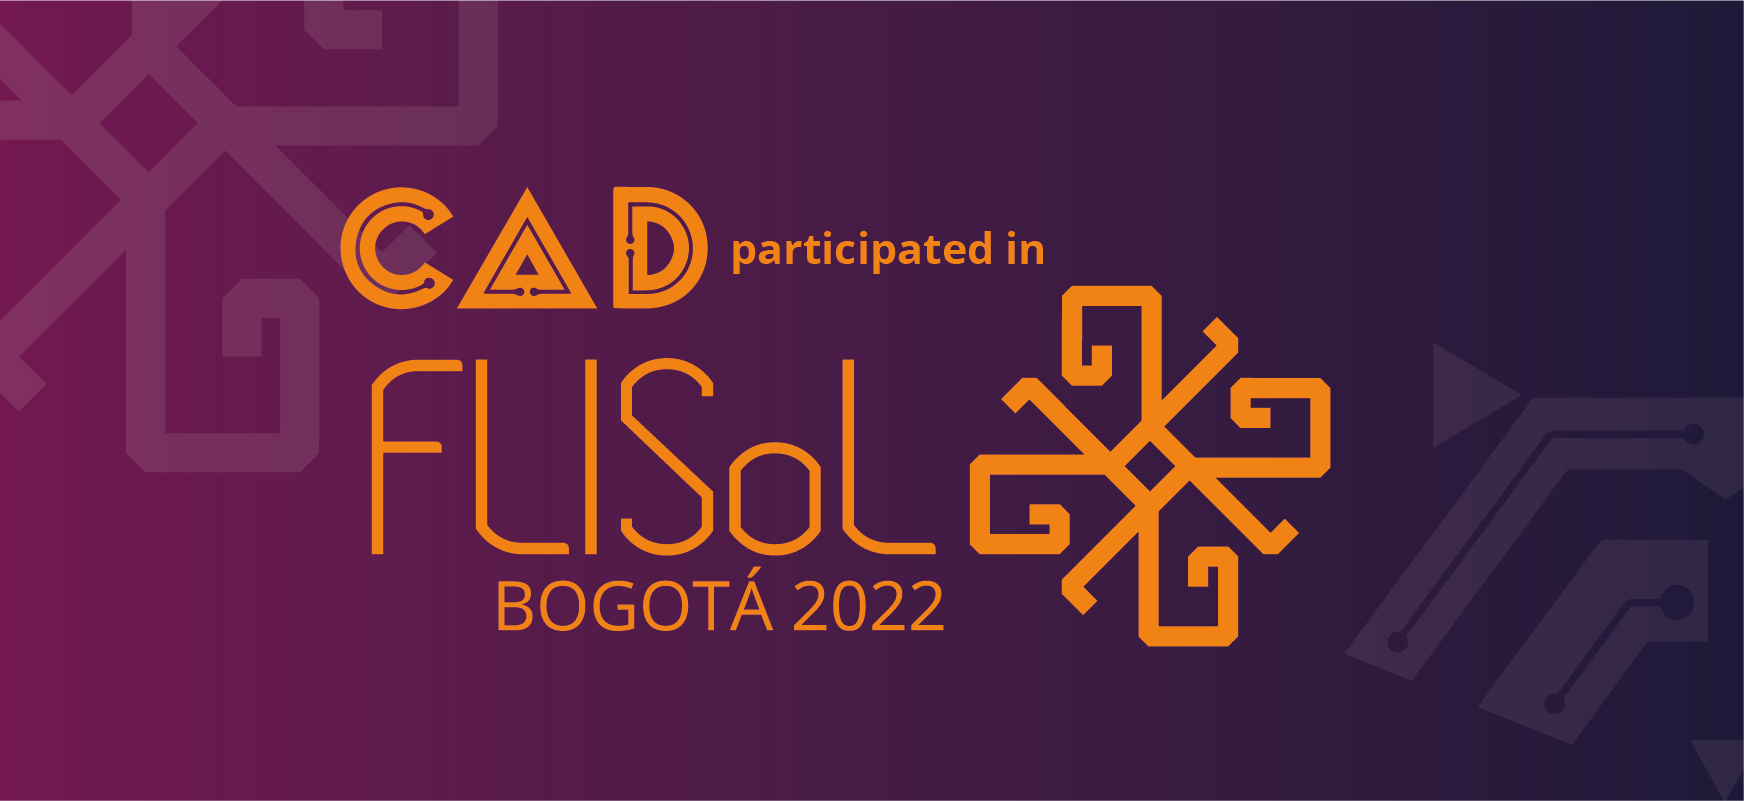 CAD participated in FLISoL Bogotá 2022